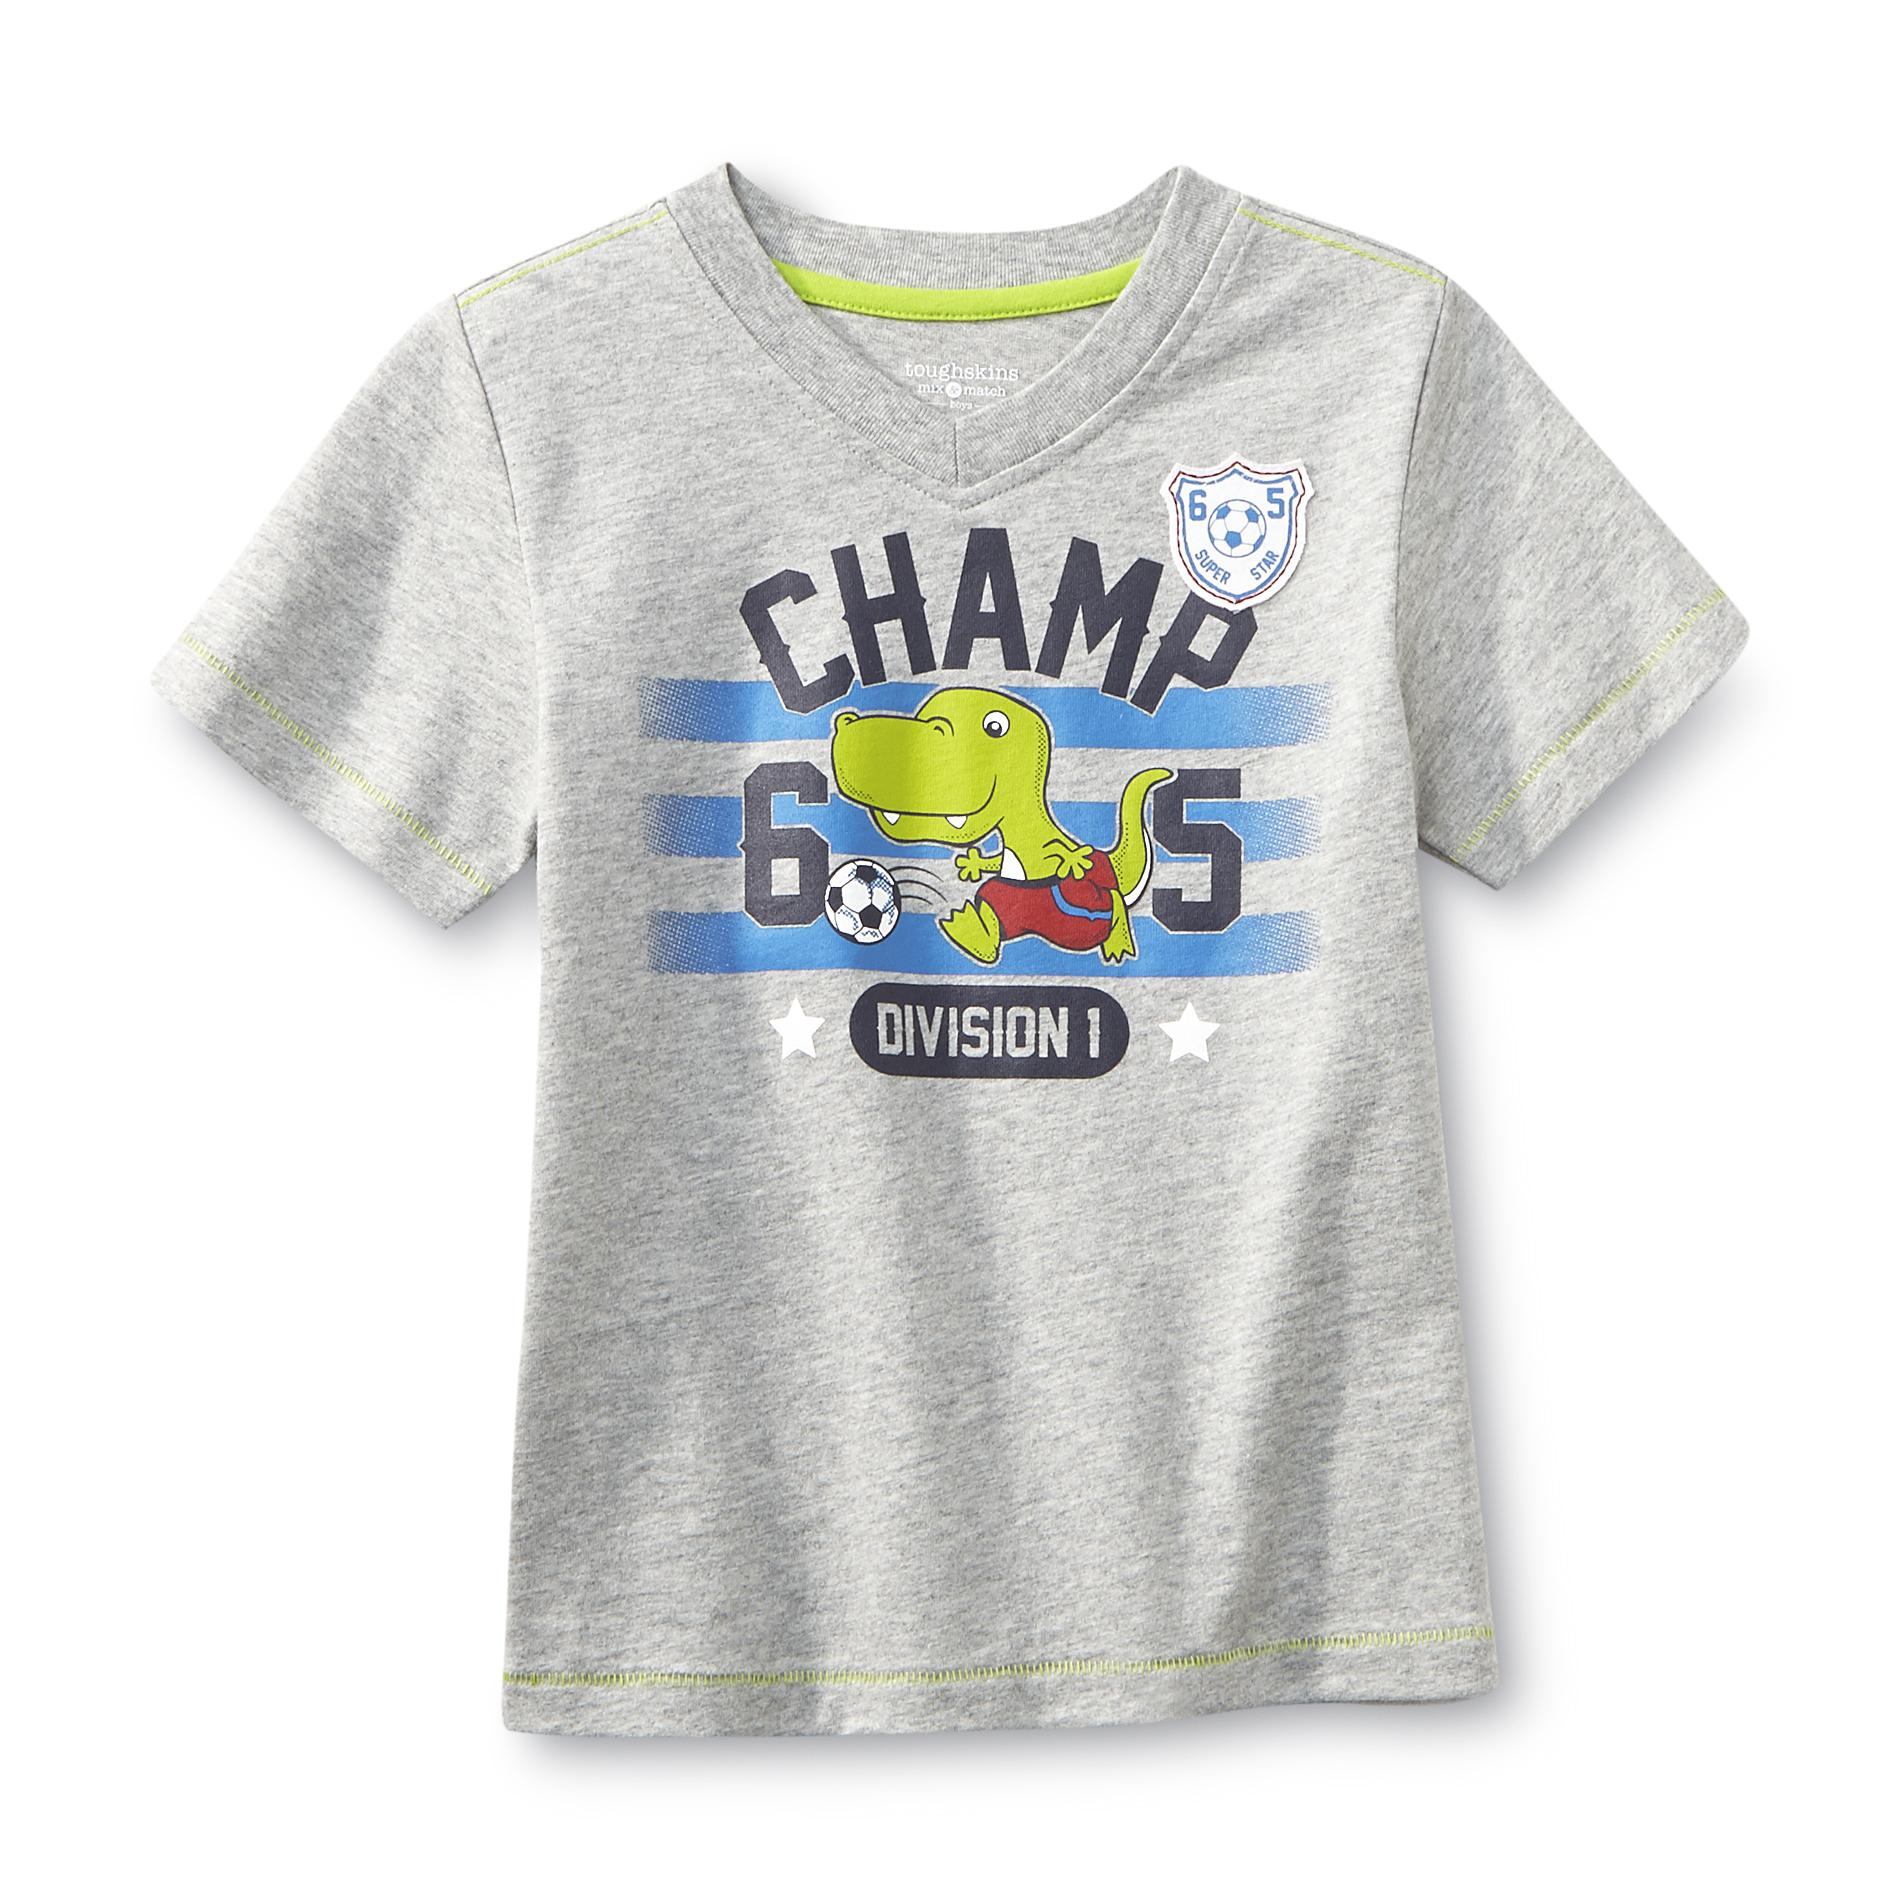 Toughskins Infant & Toddler Boy's T-Shirt - Champ